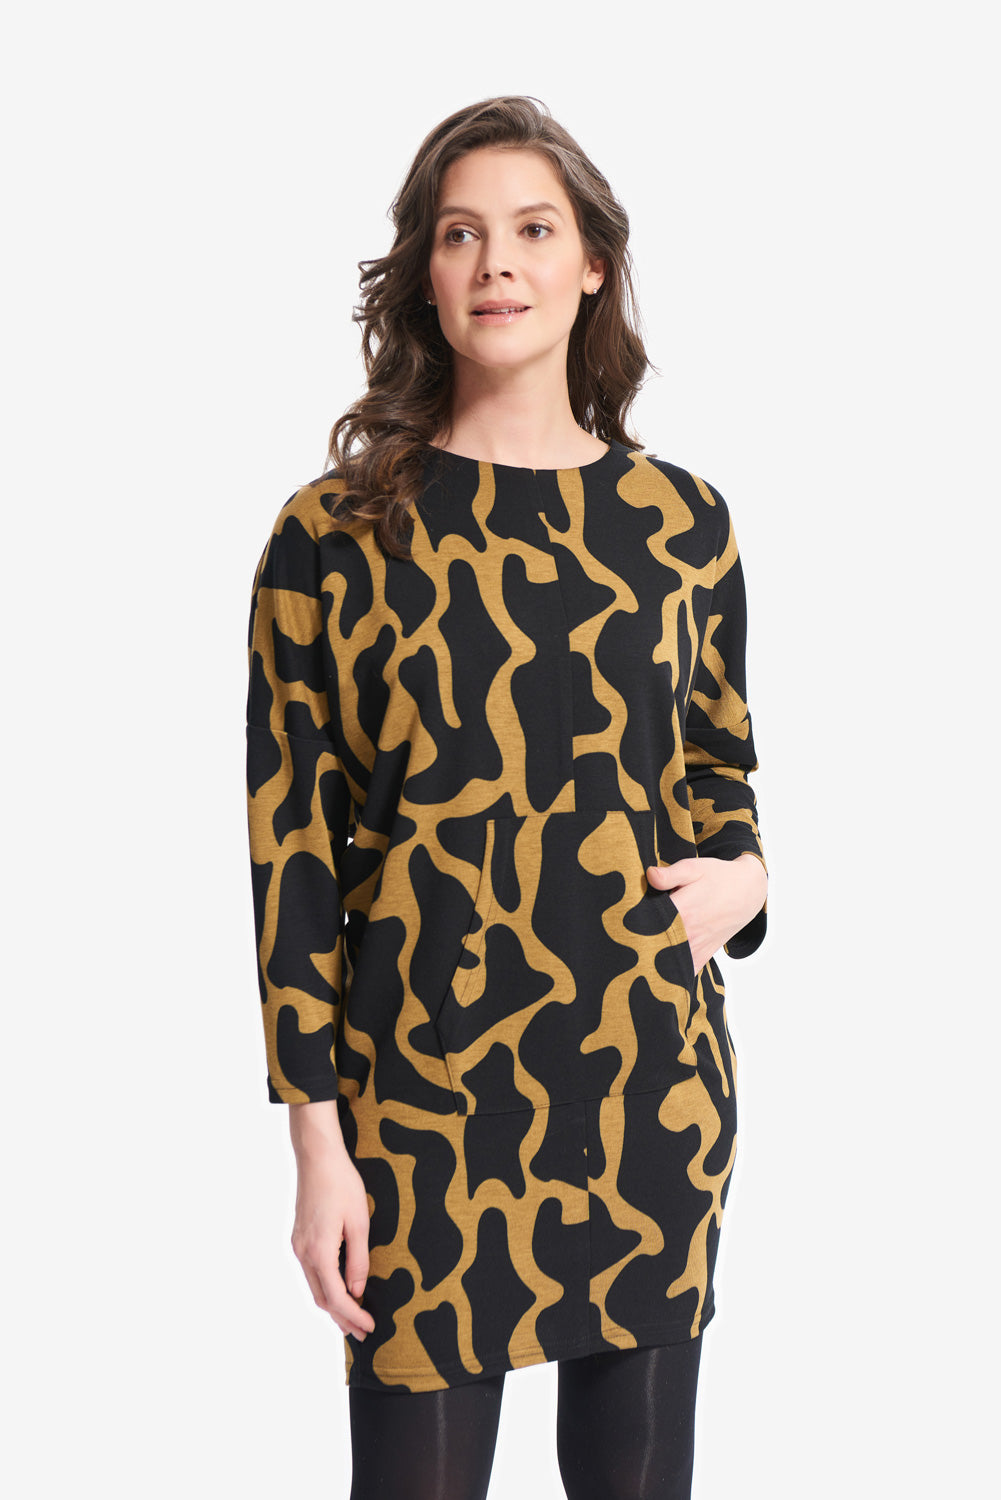 Joseph Ribkoff Black-Mustard Abstract Printed Dress Style 214282